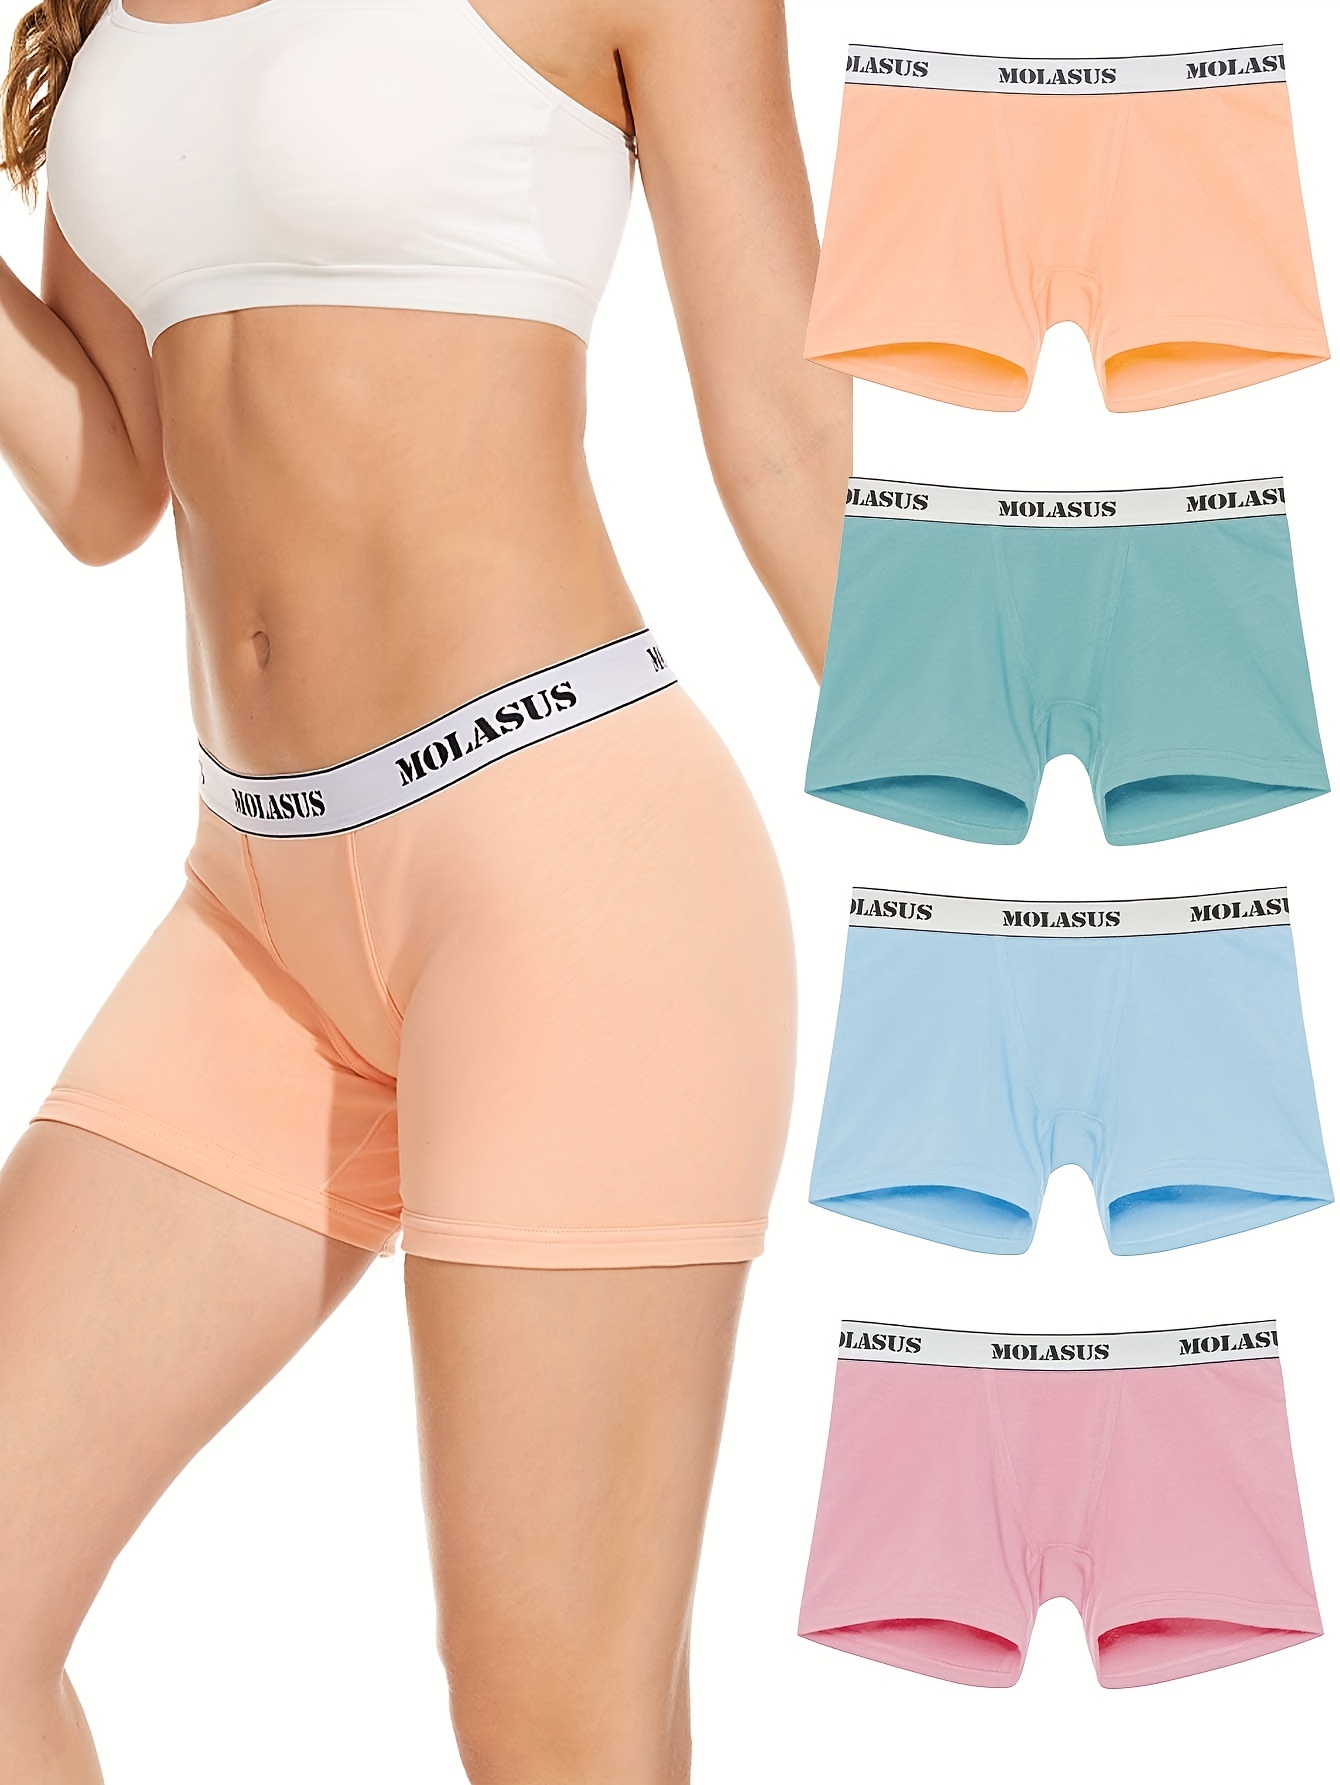 Soft women boxer shorts underwear For Comfort 